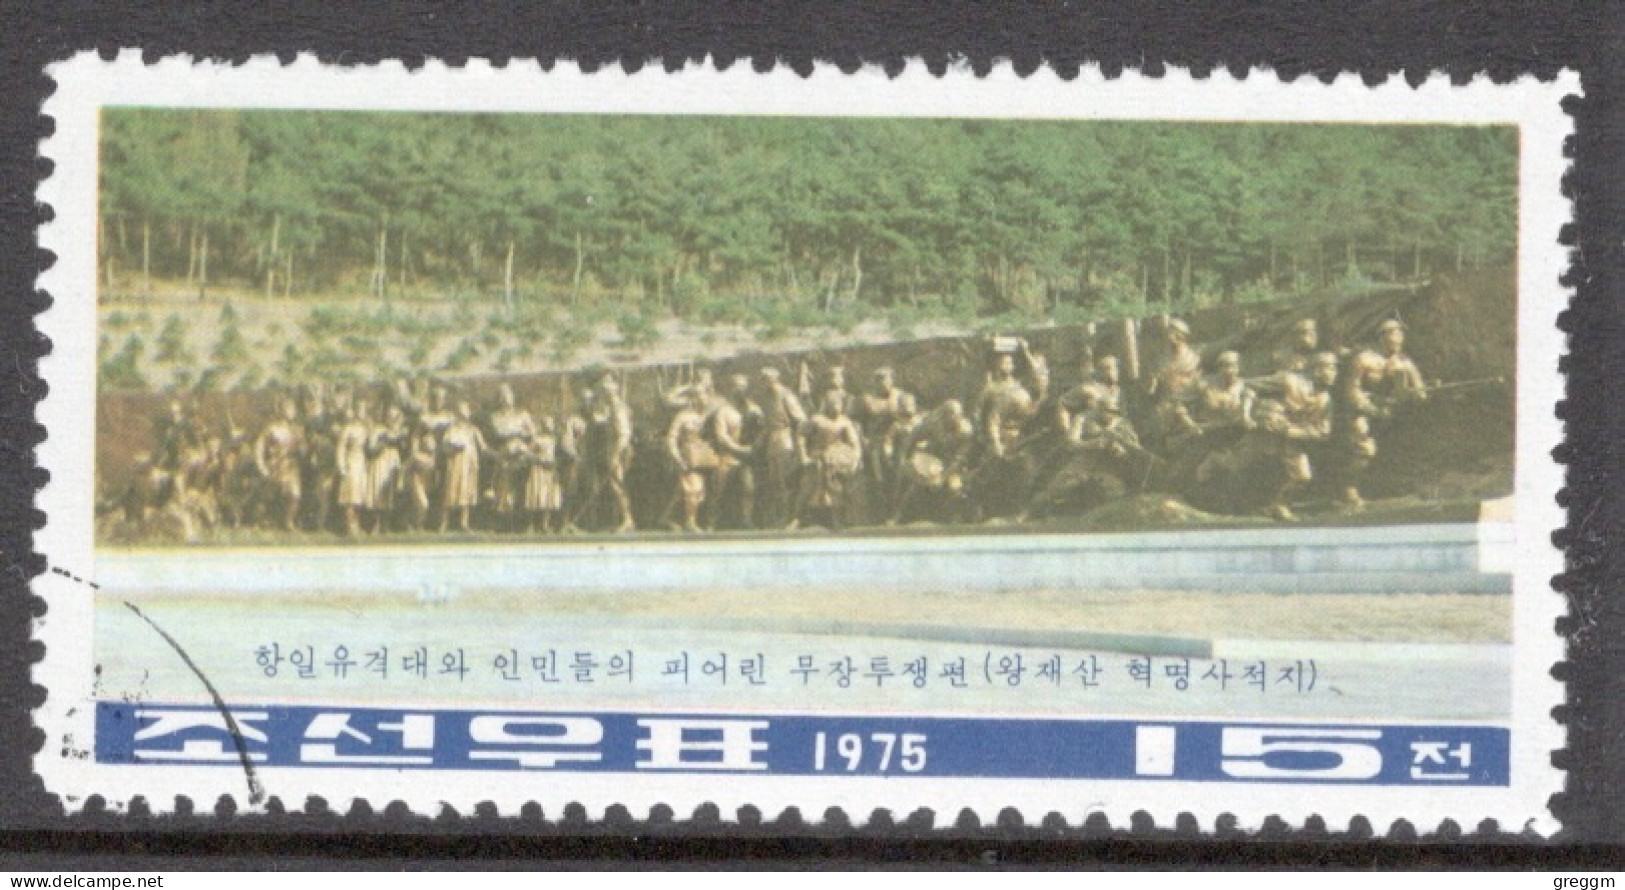 North Korea 1975 Single Stamp To Celebrate Wangjaesan Grand Monument In Fine Used. - Corée Du Nord